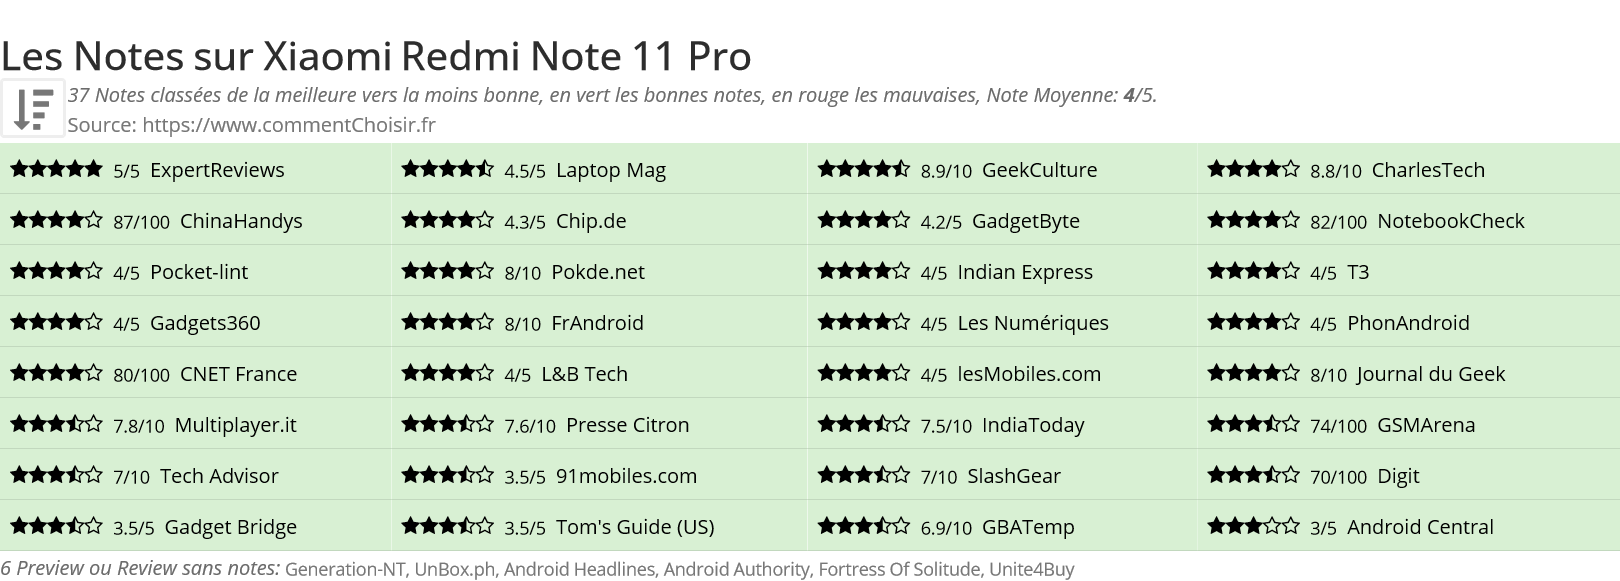 Ratings Xiaomi Redmi Note 11 Pro